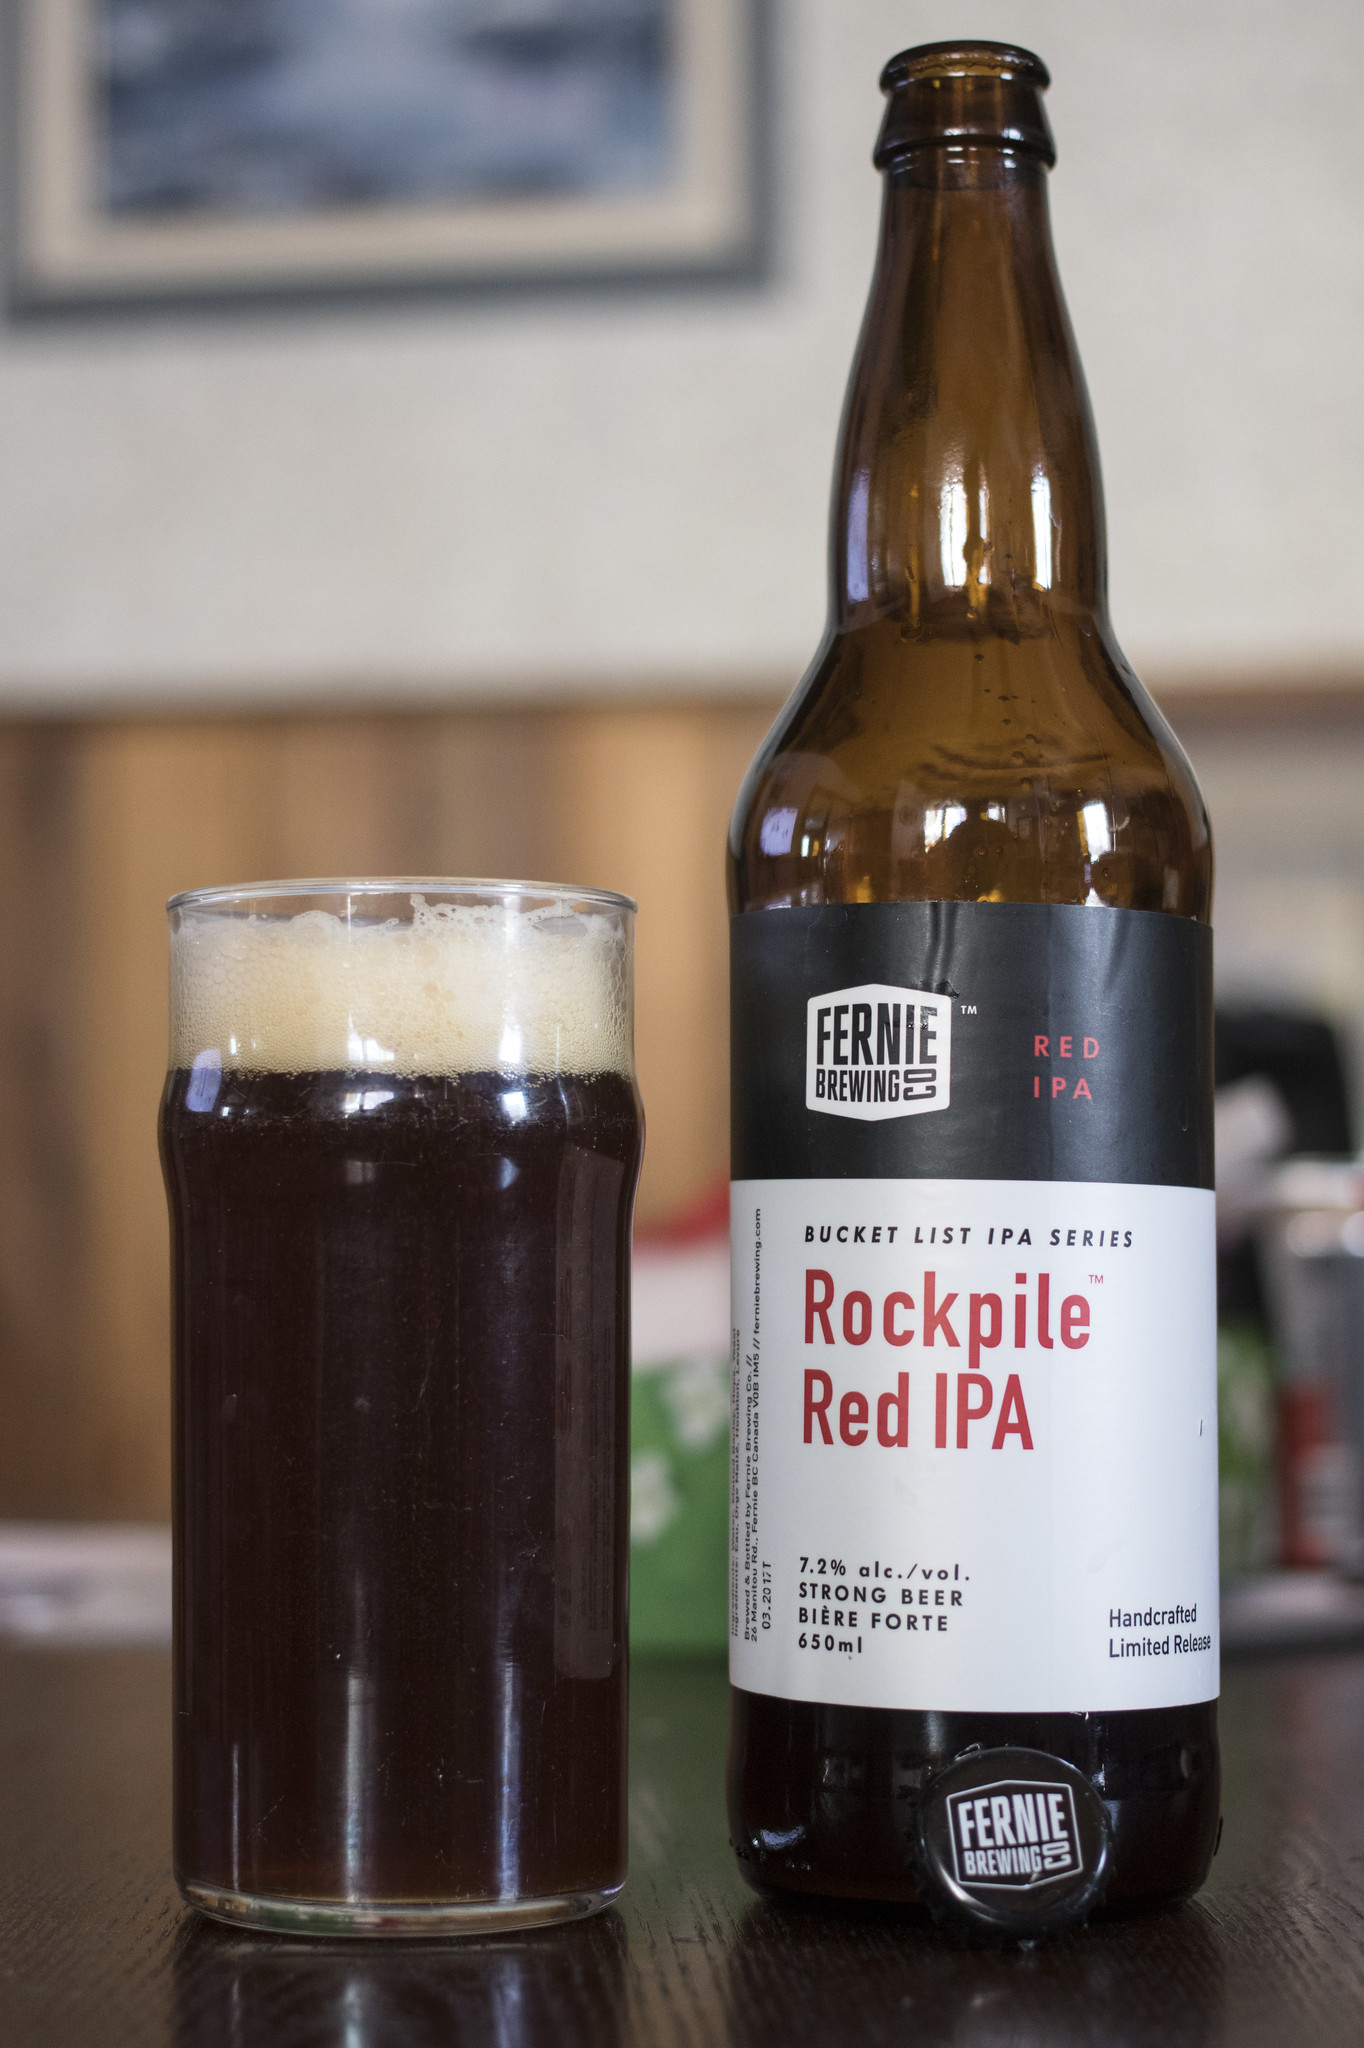 Fernie Brewing's Rockpile Red IPA